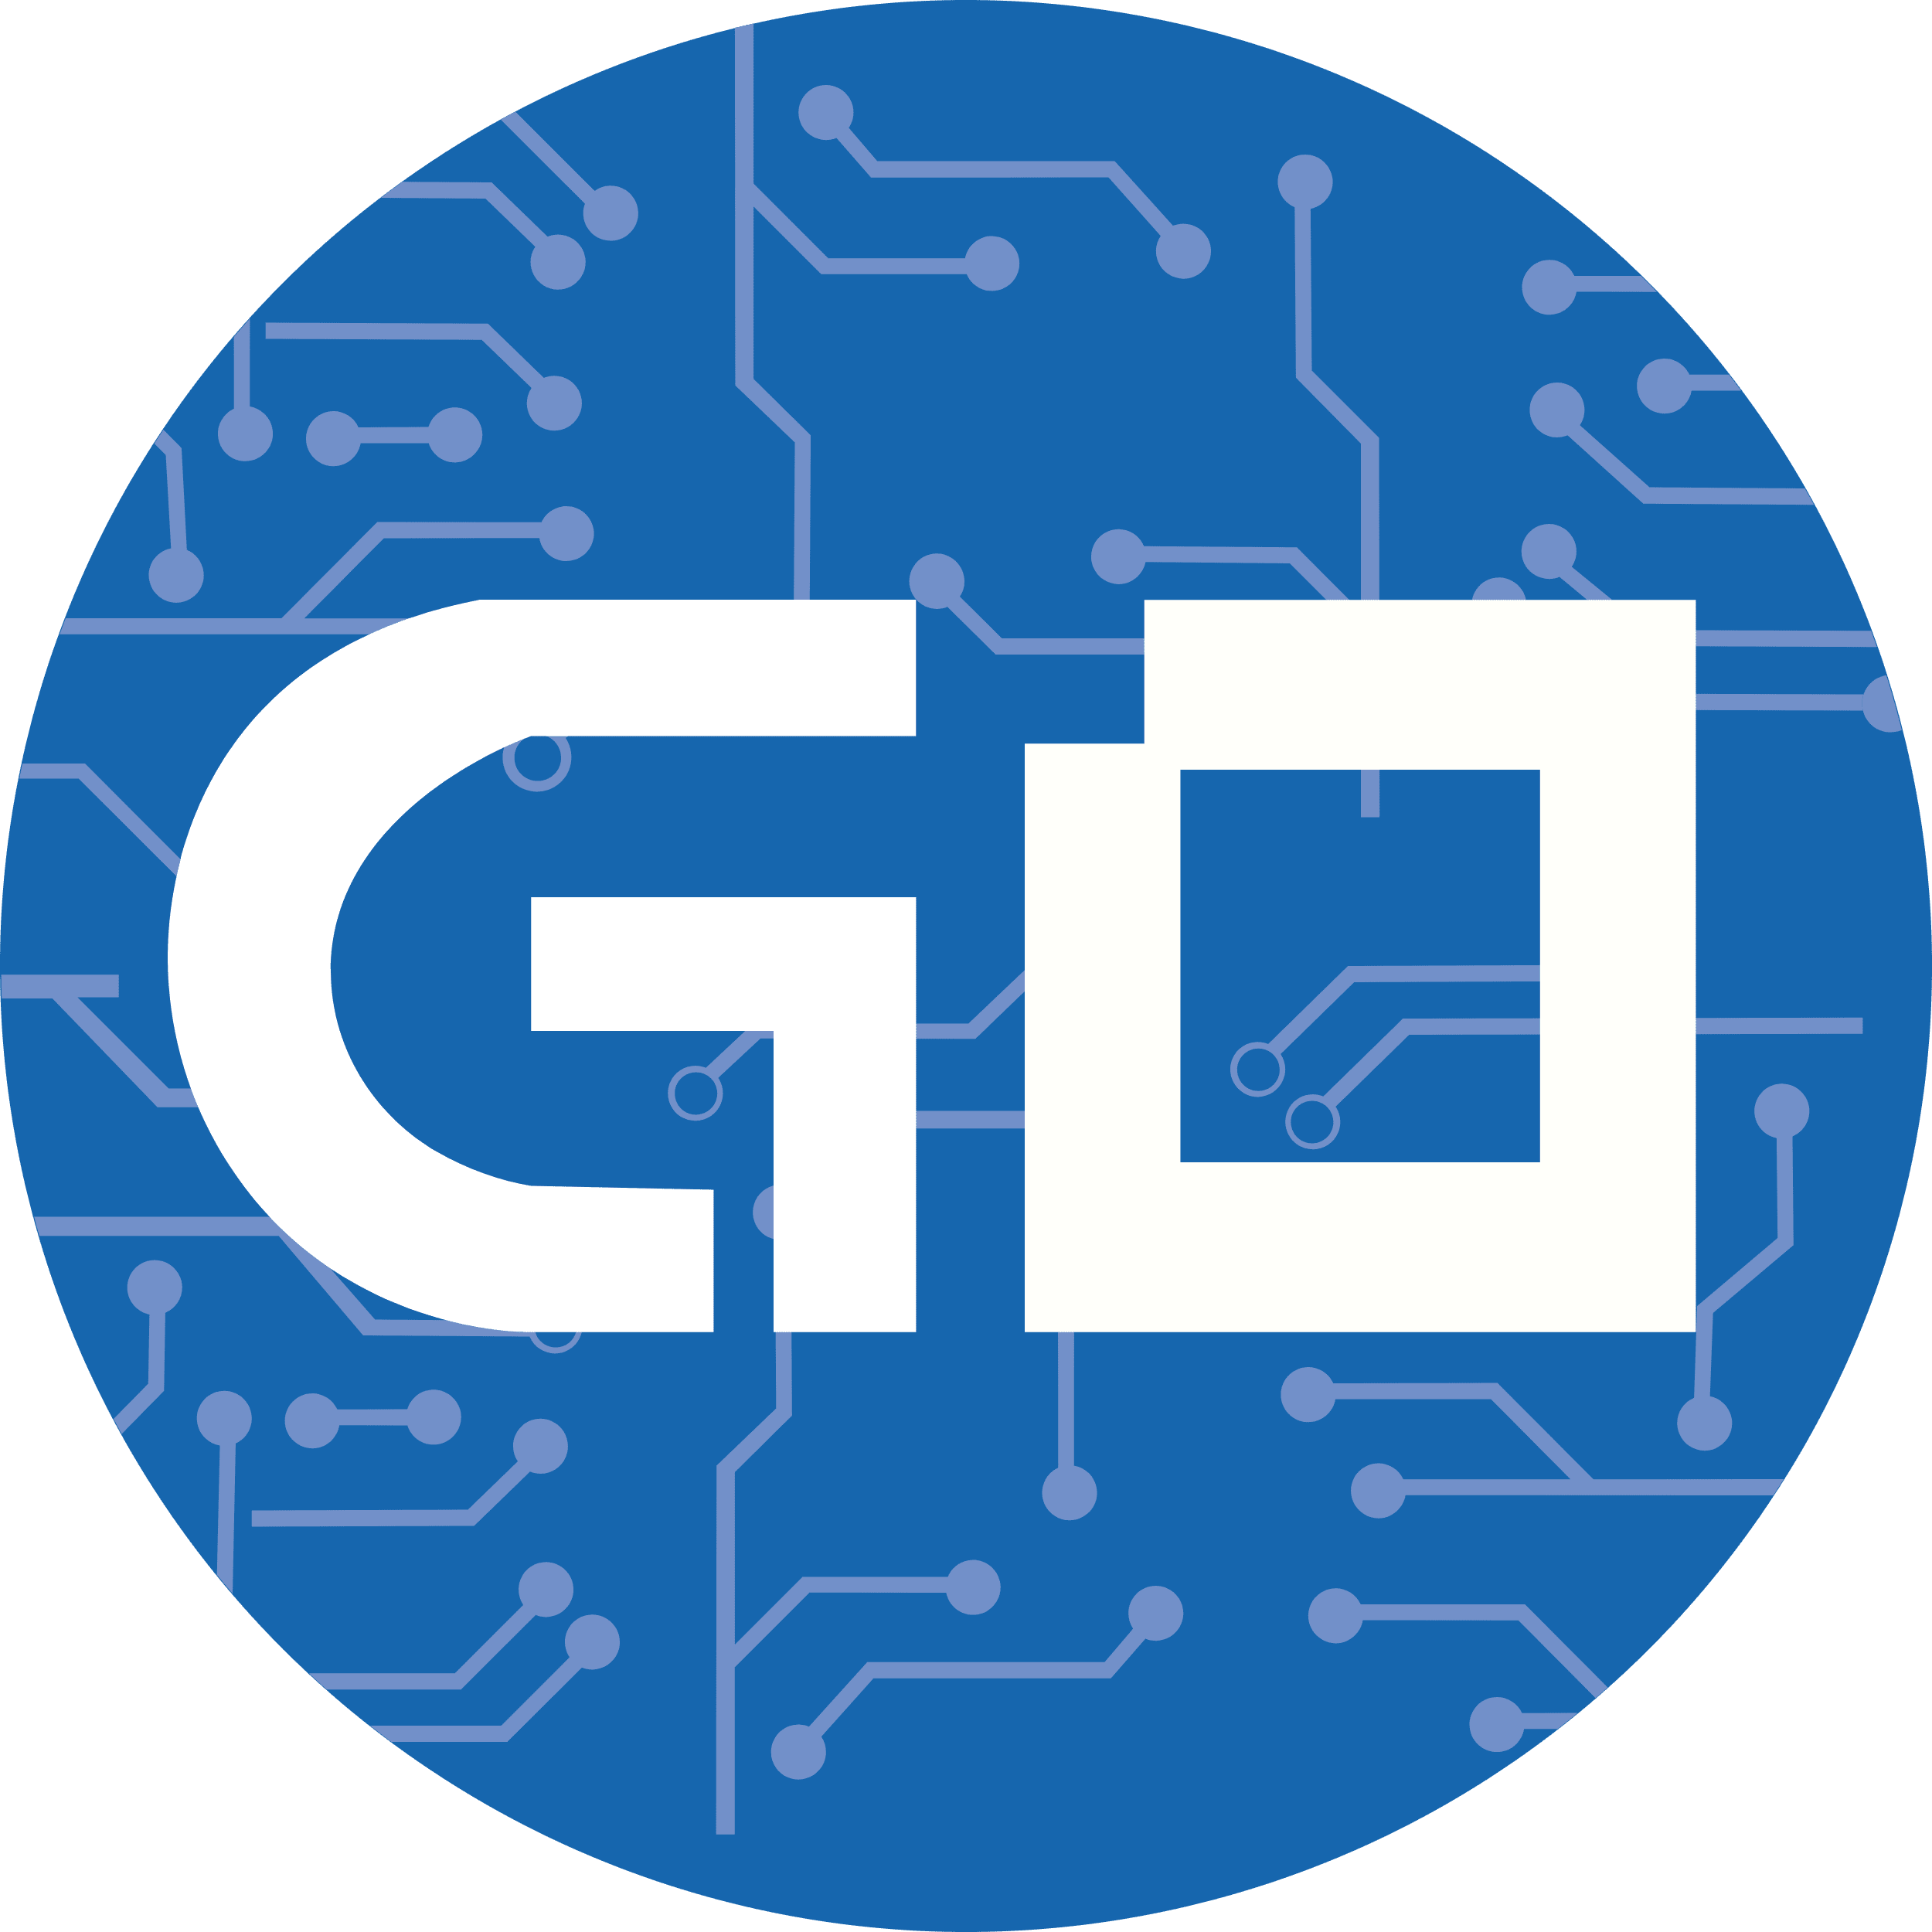 GoByte logo in svg format